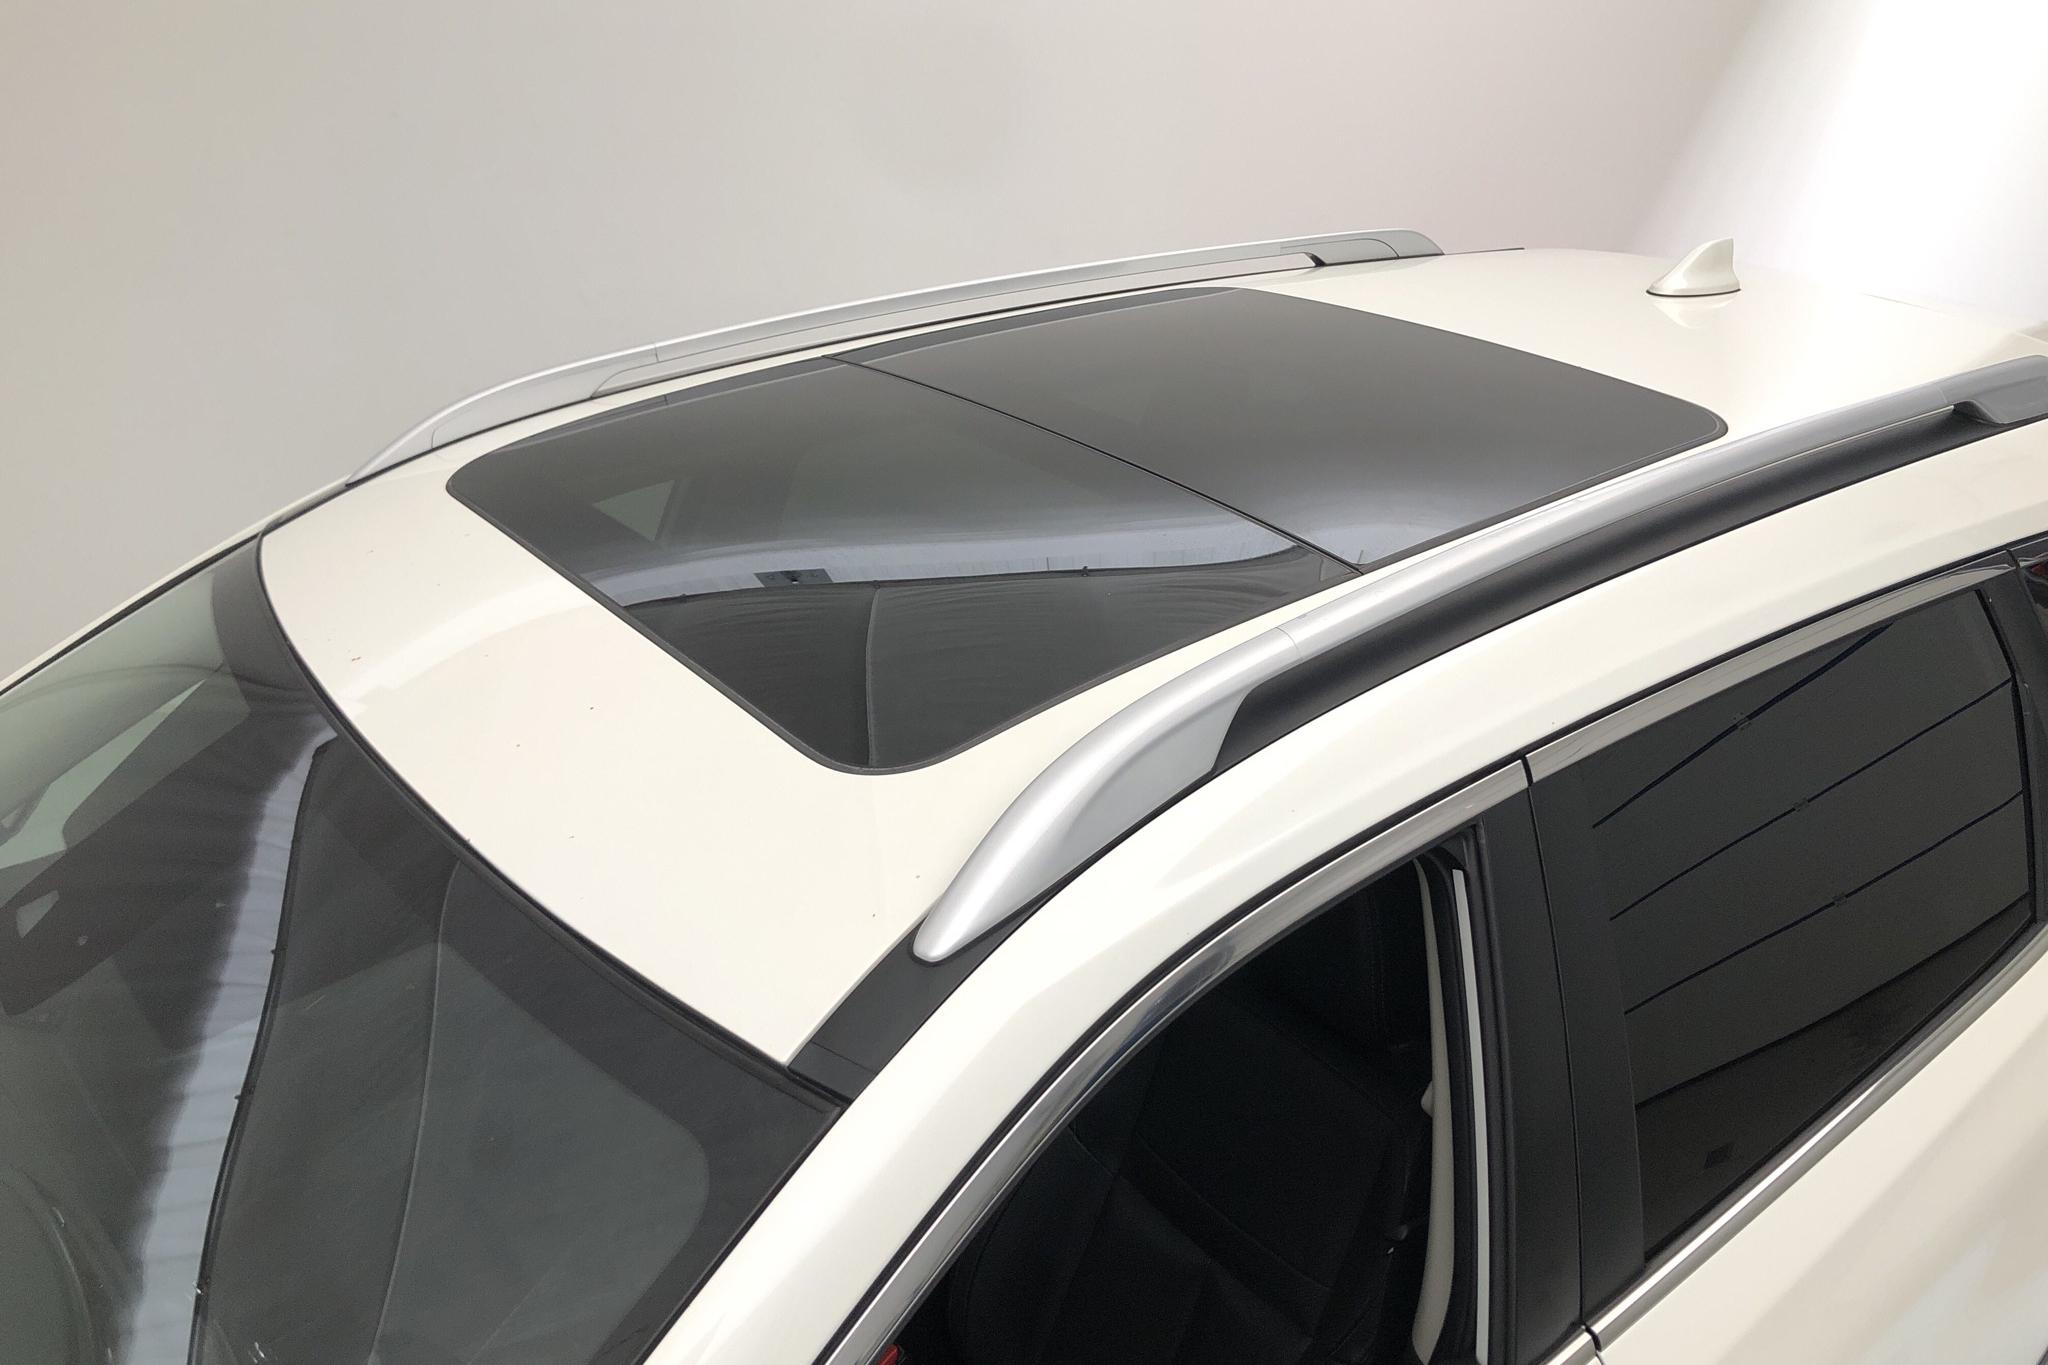 Nissan X-trail 2.0 dCi 4WD (177hk) - 106 770 km - Automatic - white - 2018